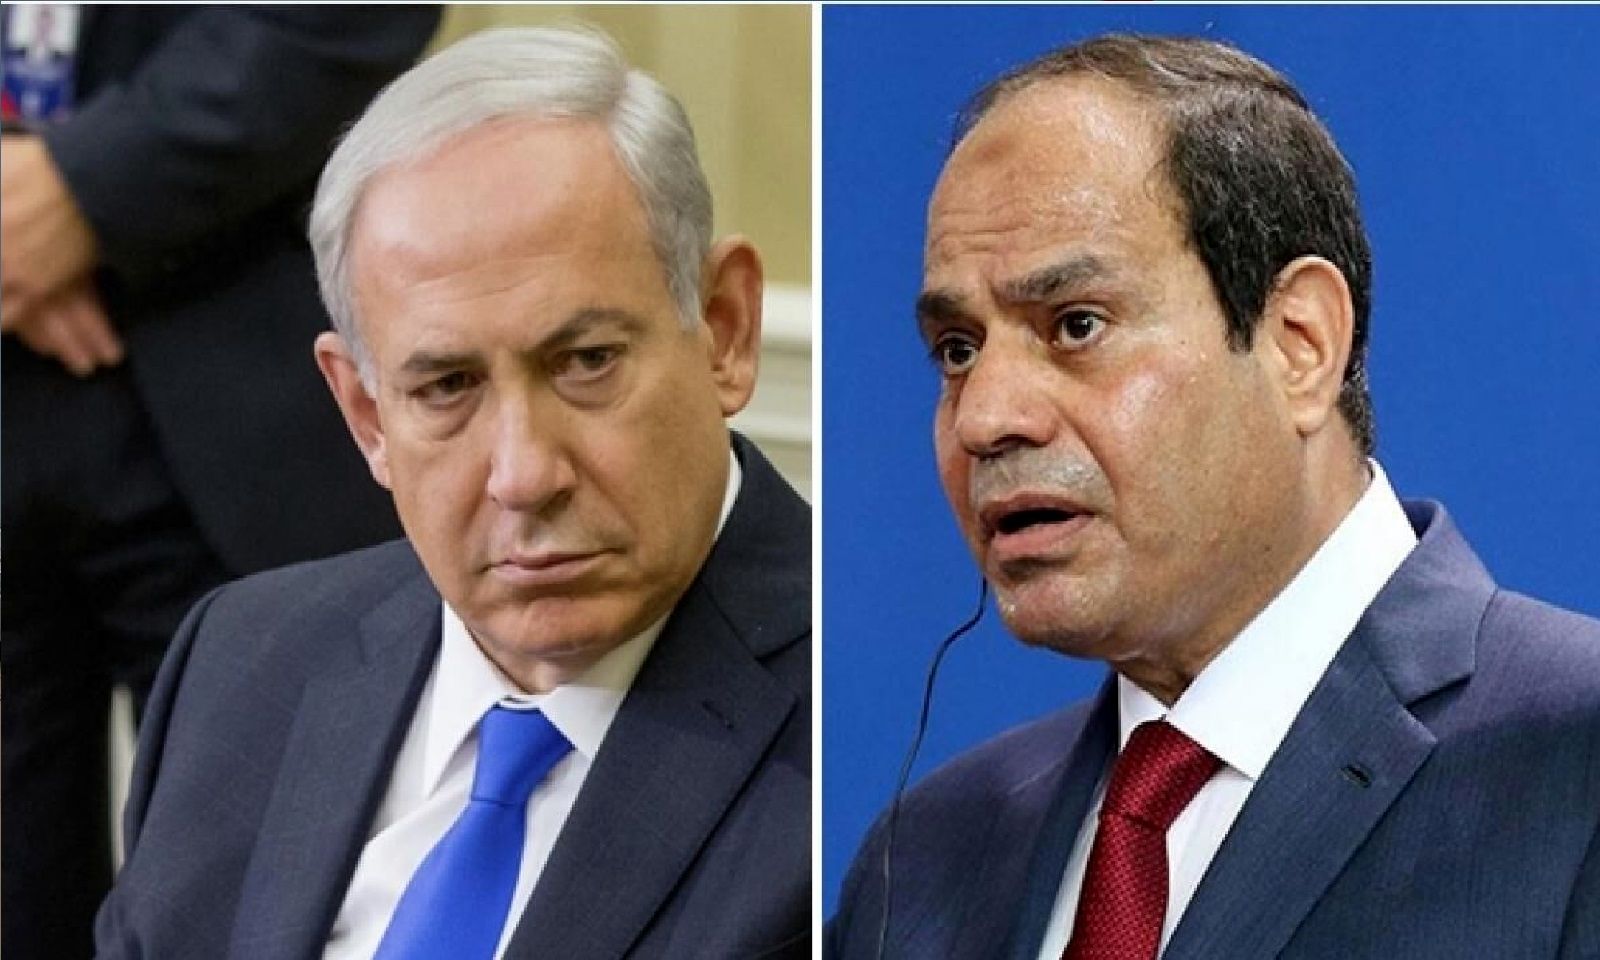 اعتراض مصر به اسرائیل/ السیسی پاسخ تماس نتانیاهو را نداد